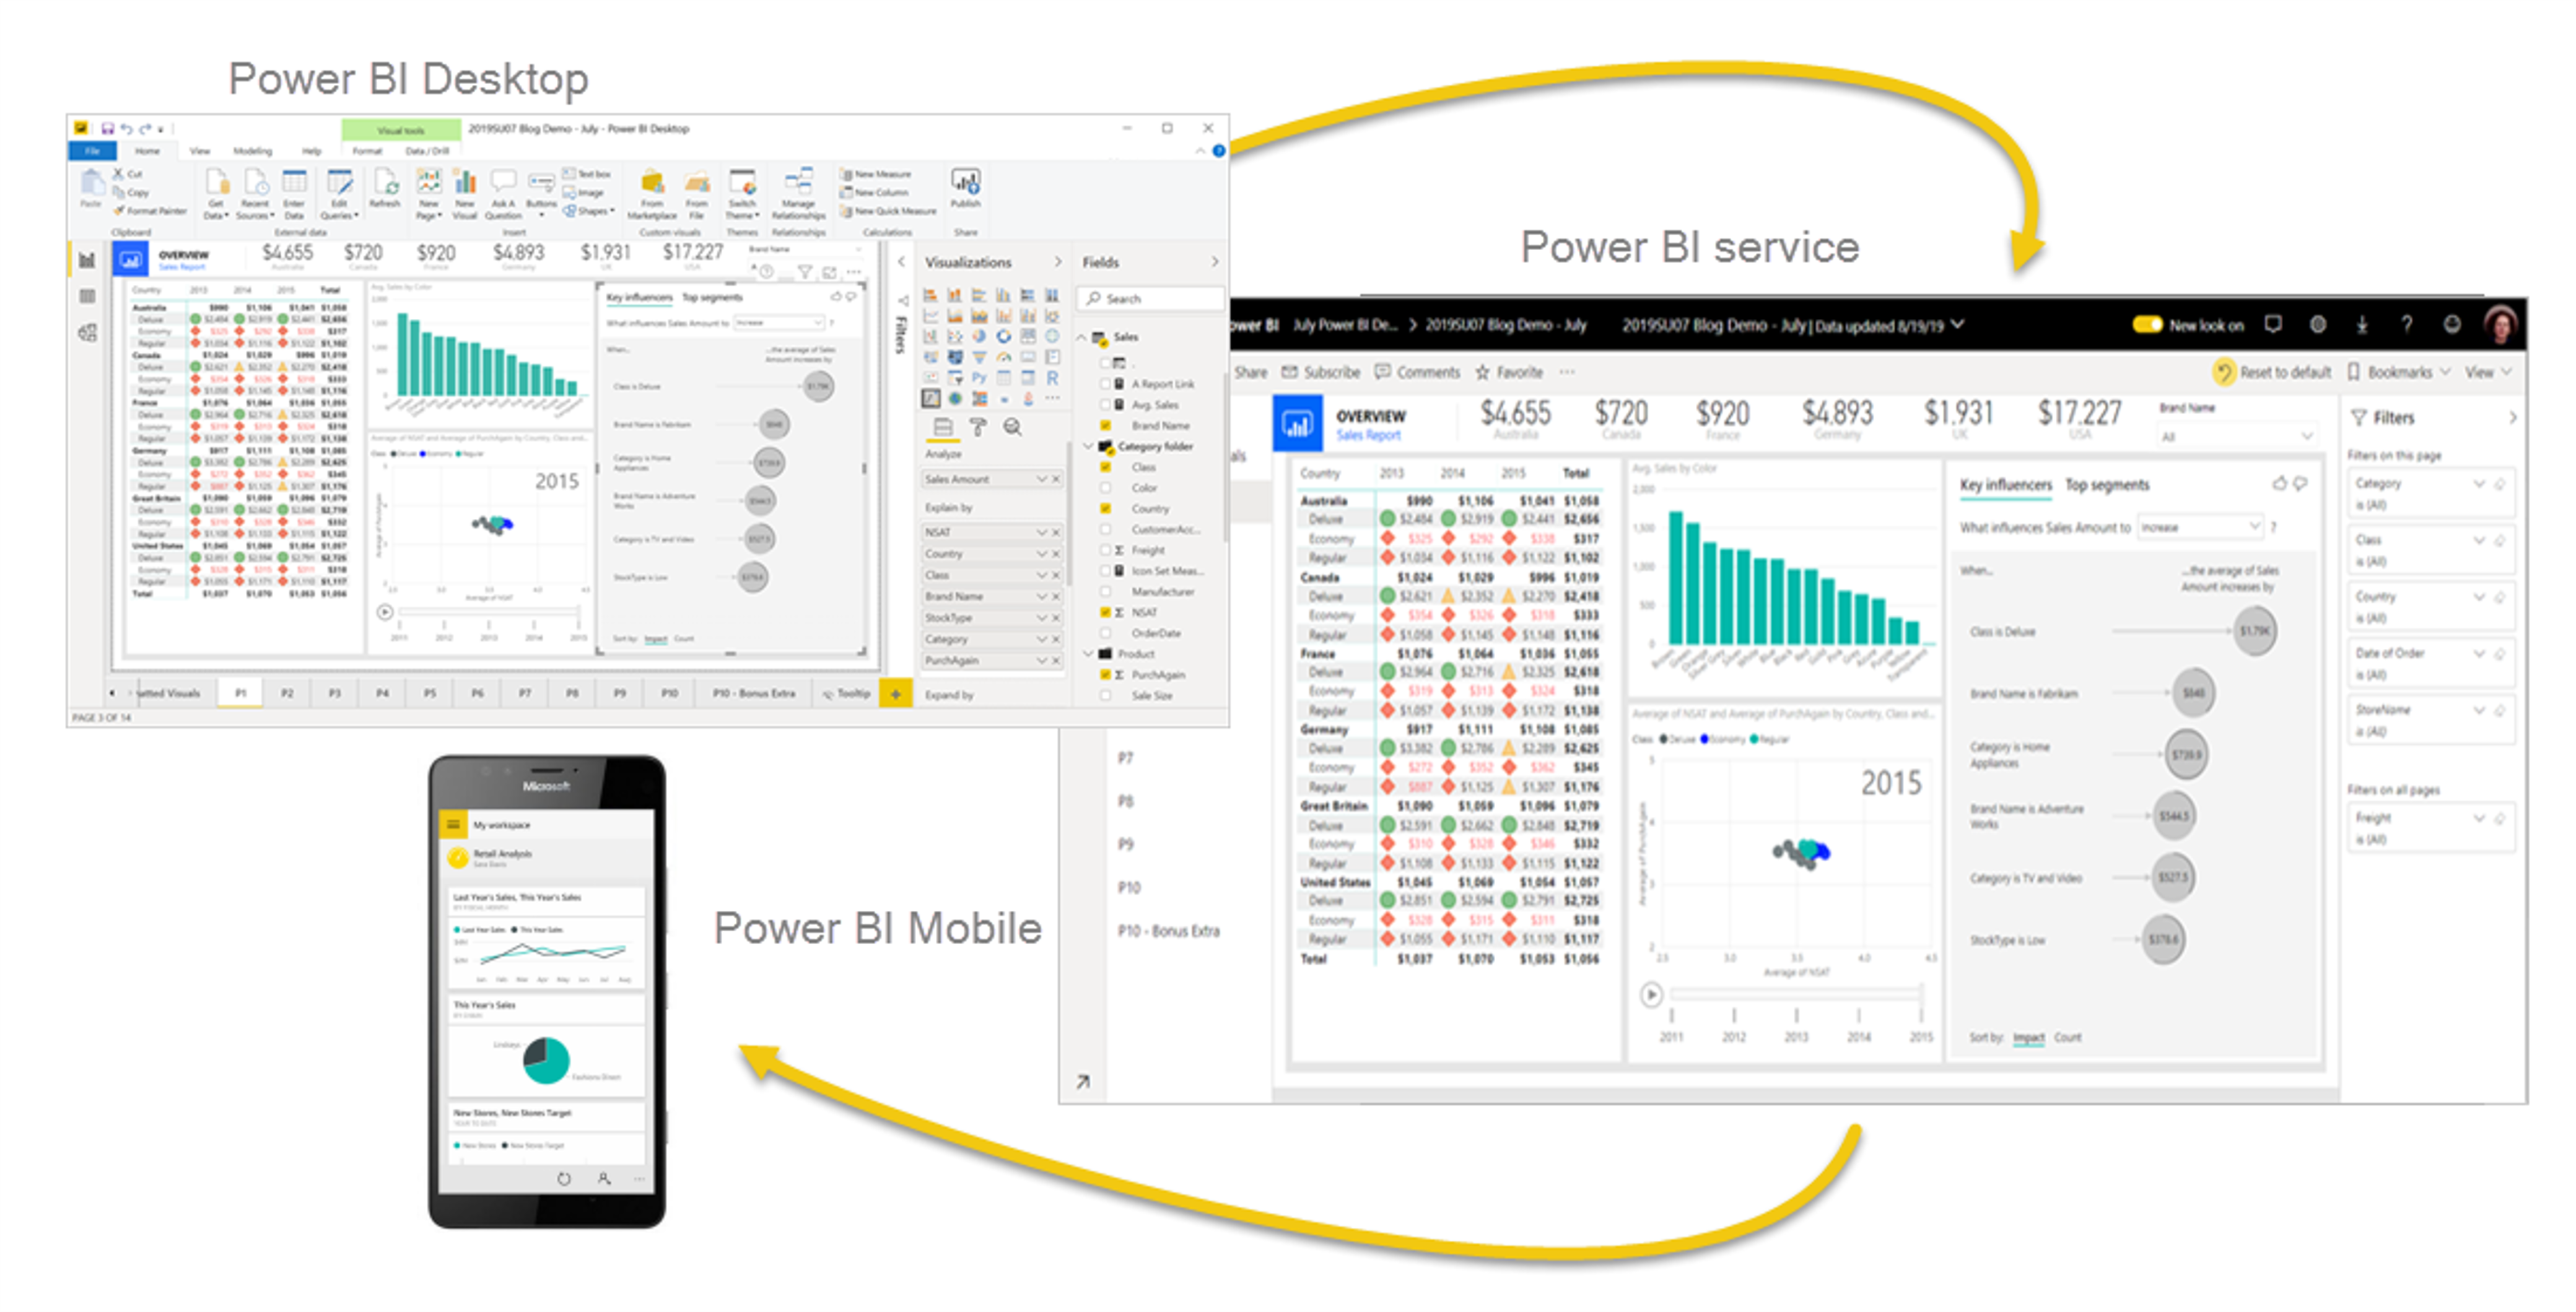 Screenshots of the Power BI Desktop, the Power BI service and Power BI Mobile.